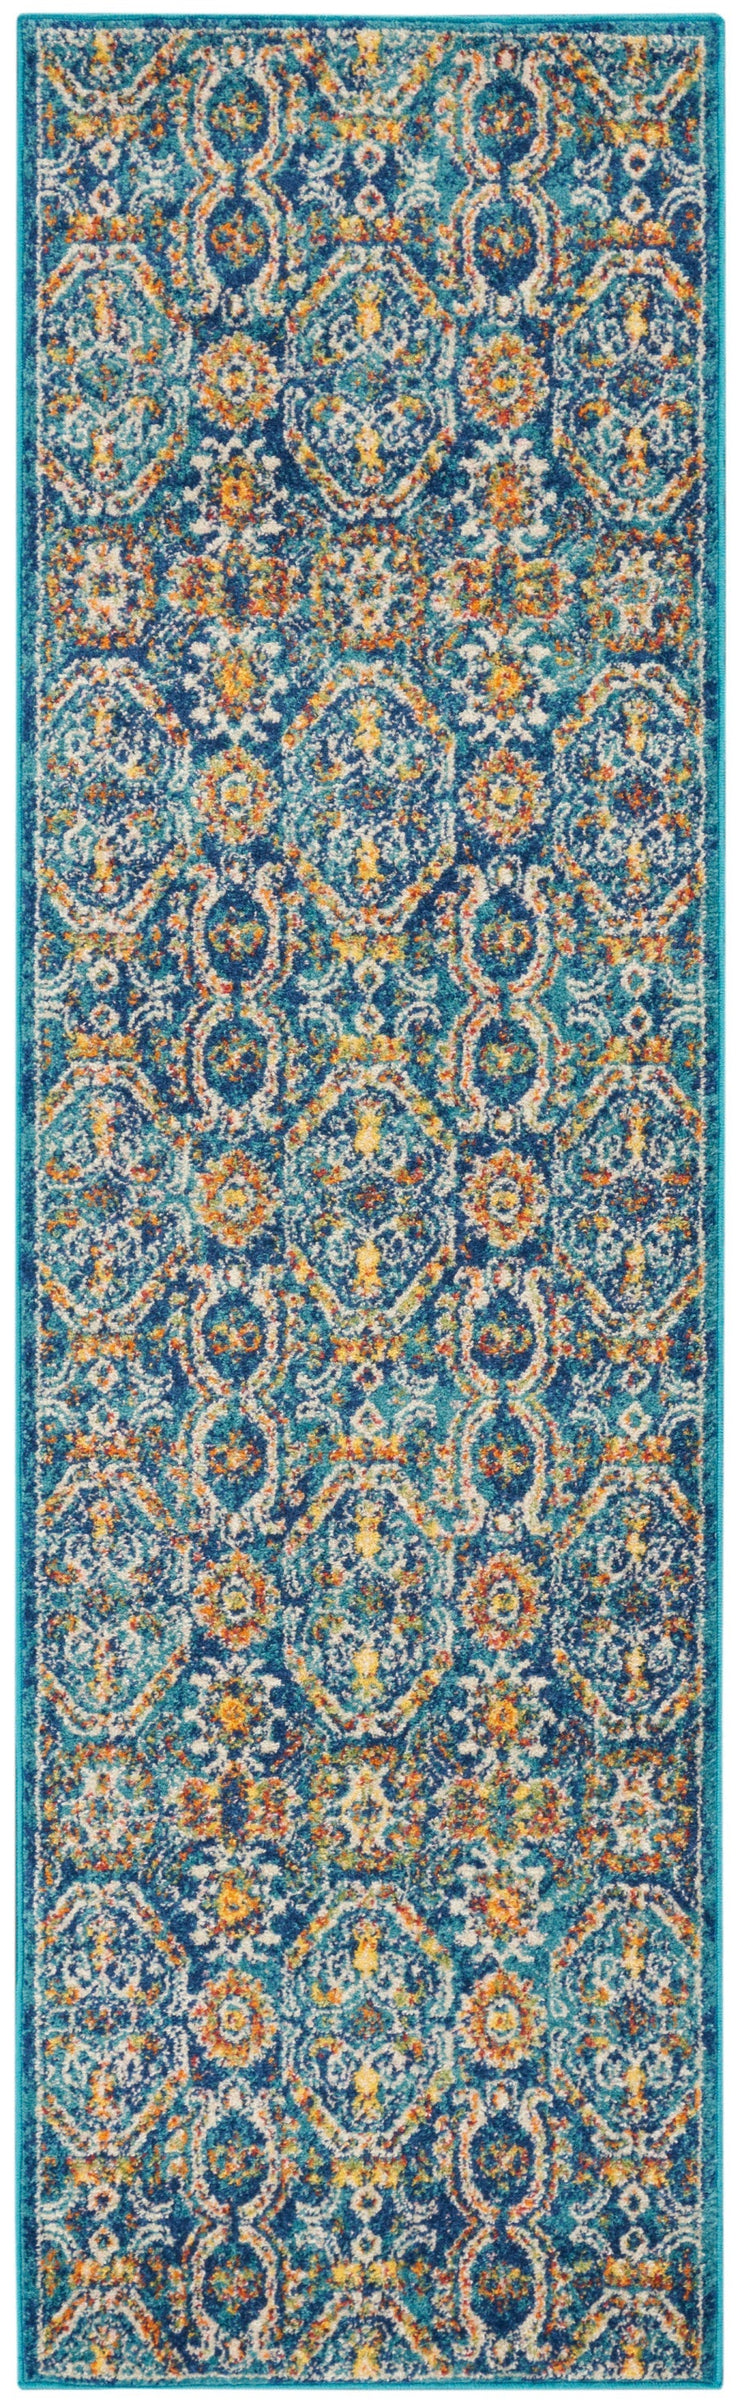 allur blue multicolor rug by nourison 99446838469 redo 2